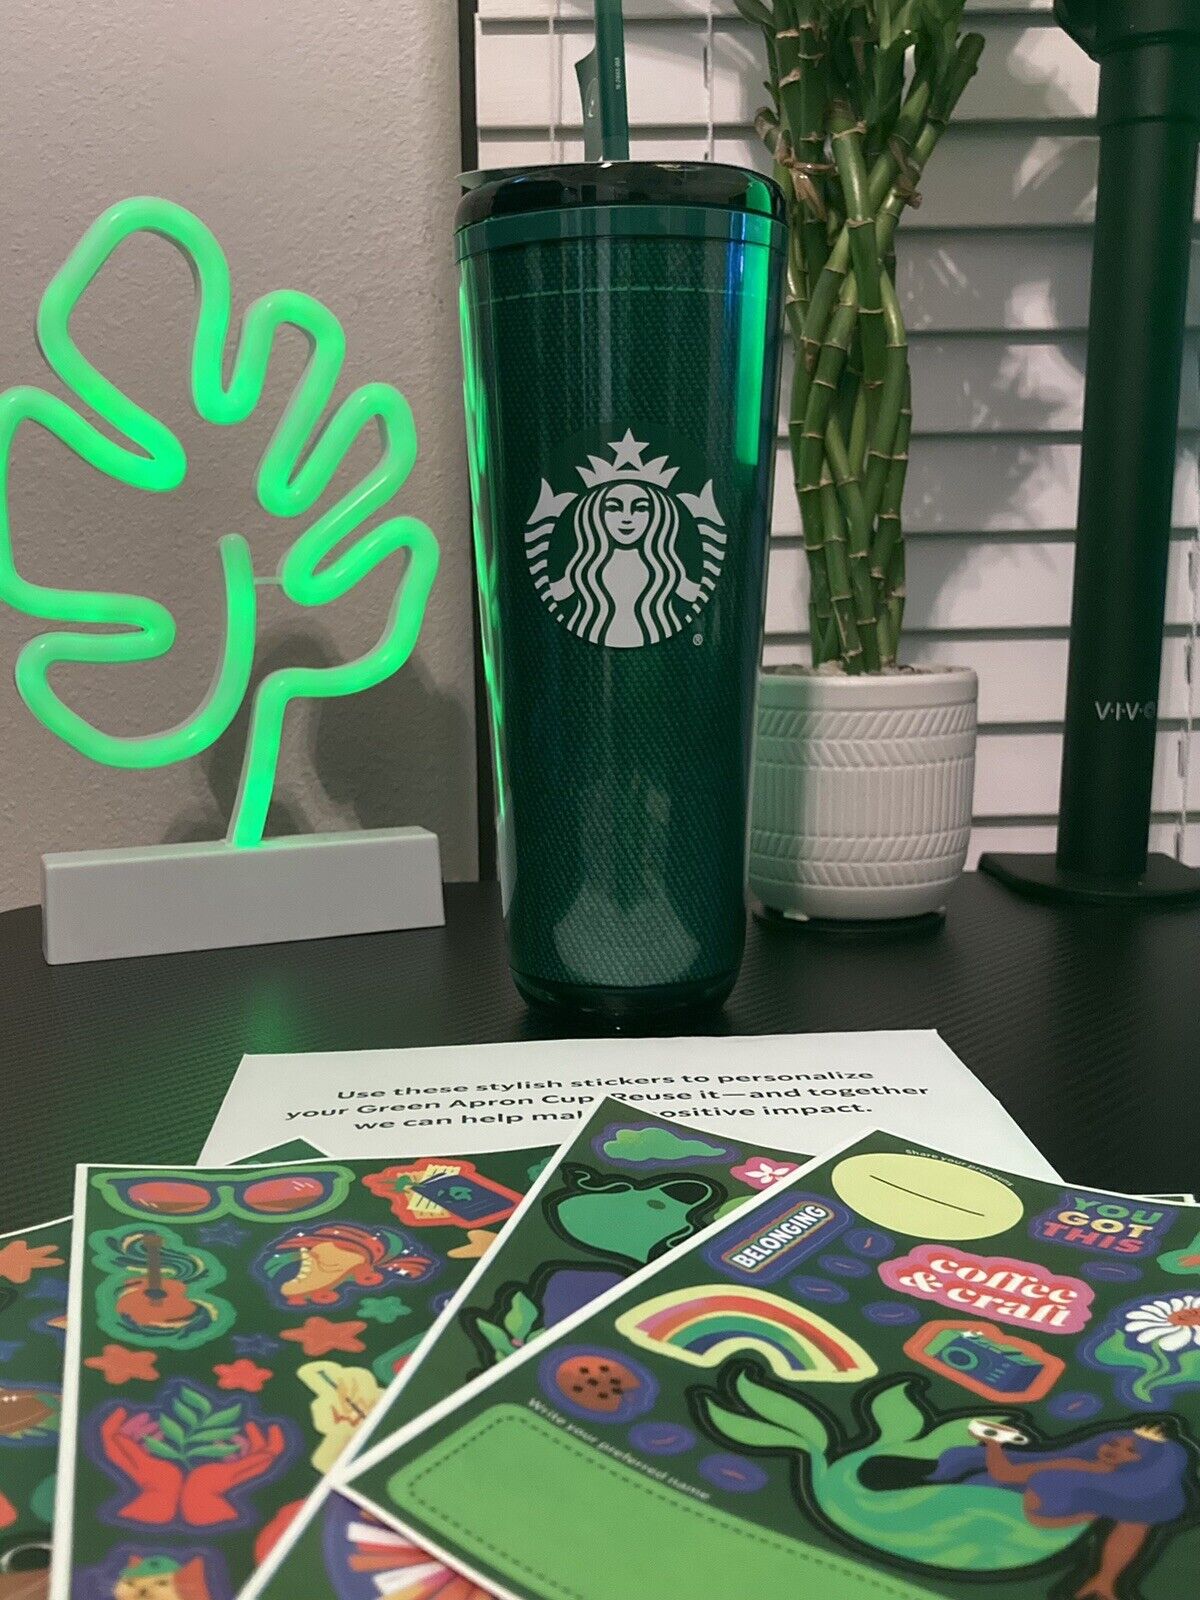 Starbucks “Green Apron” Cup - Employee Edition (24oz)